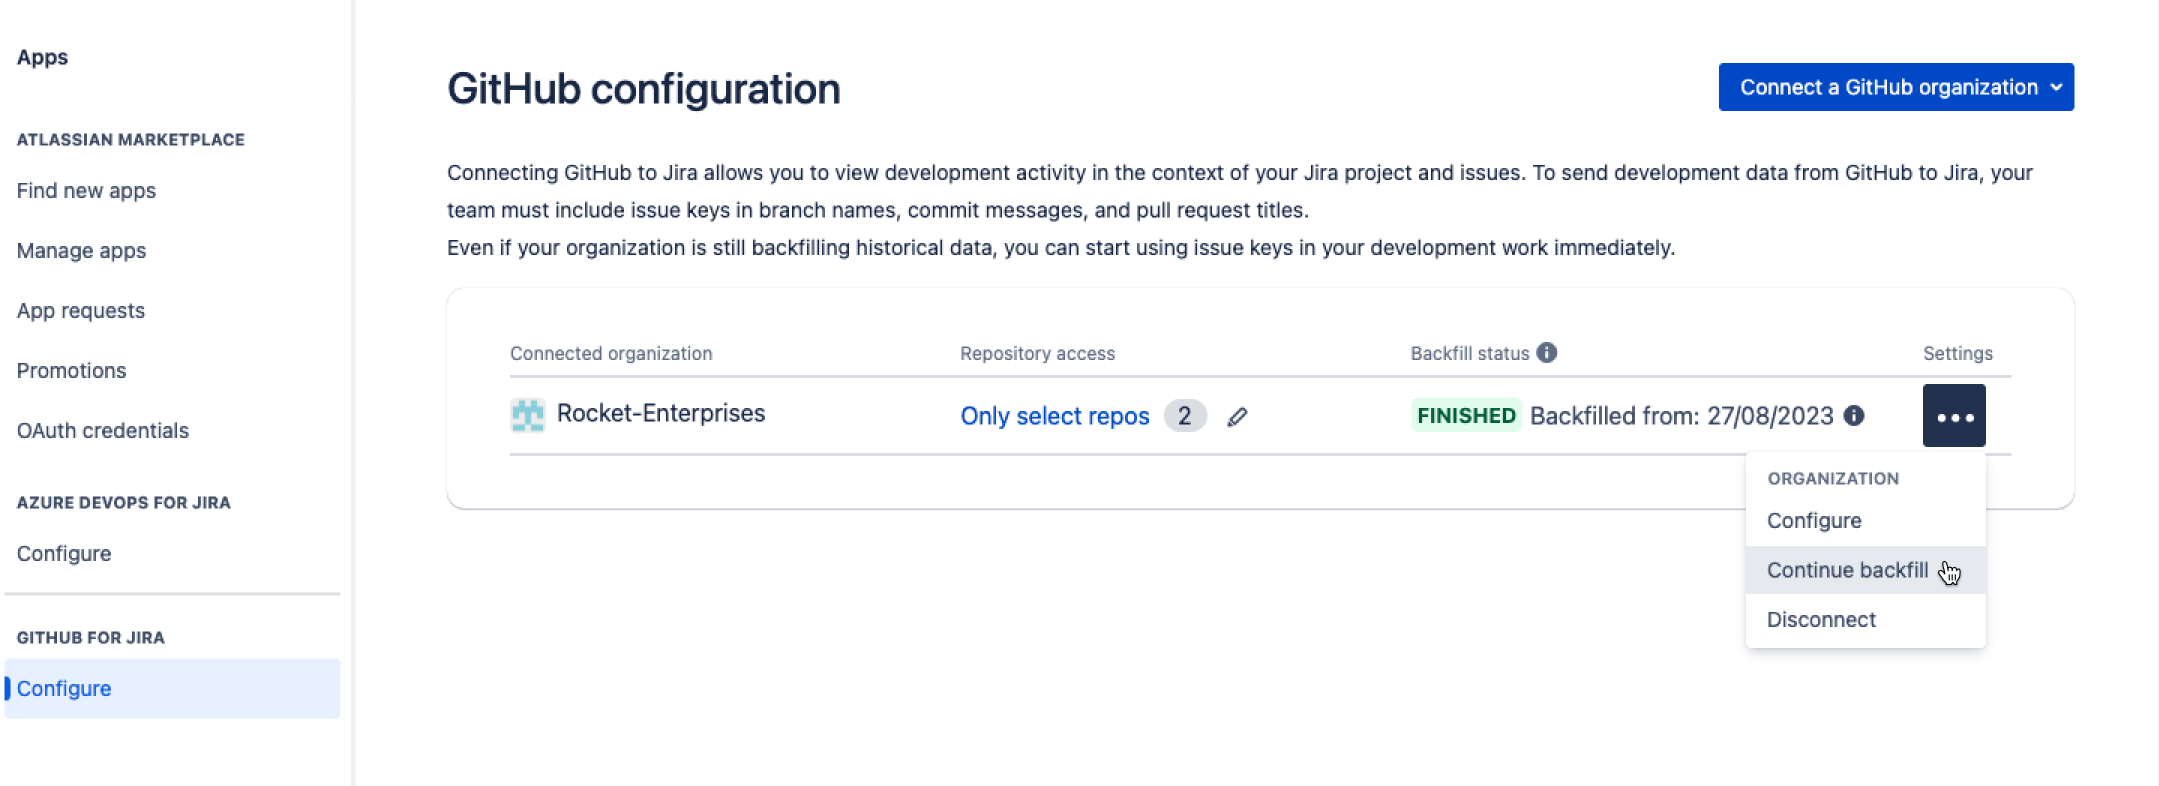 [Continue Backfill (バックフィルを続行)] オプションが選択された [設定] メニューが表示されている Jira の GitHub 設定画面。